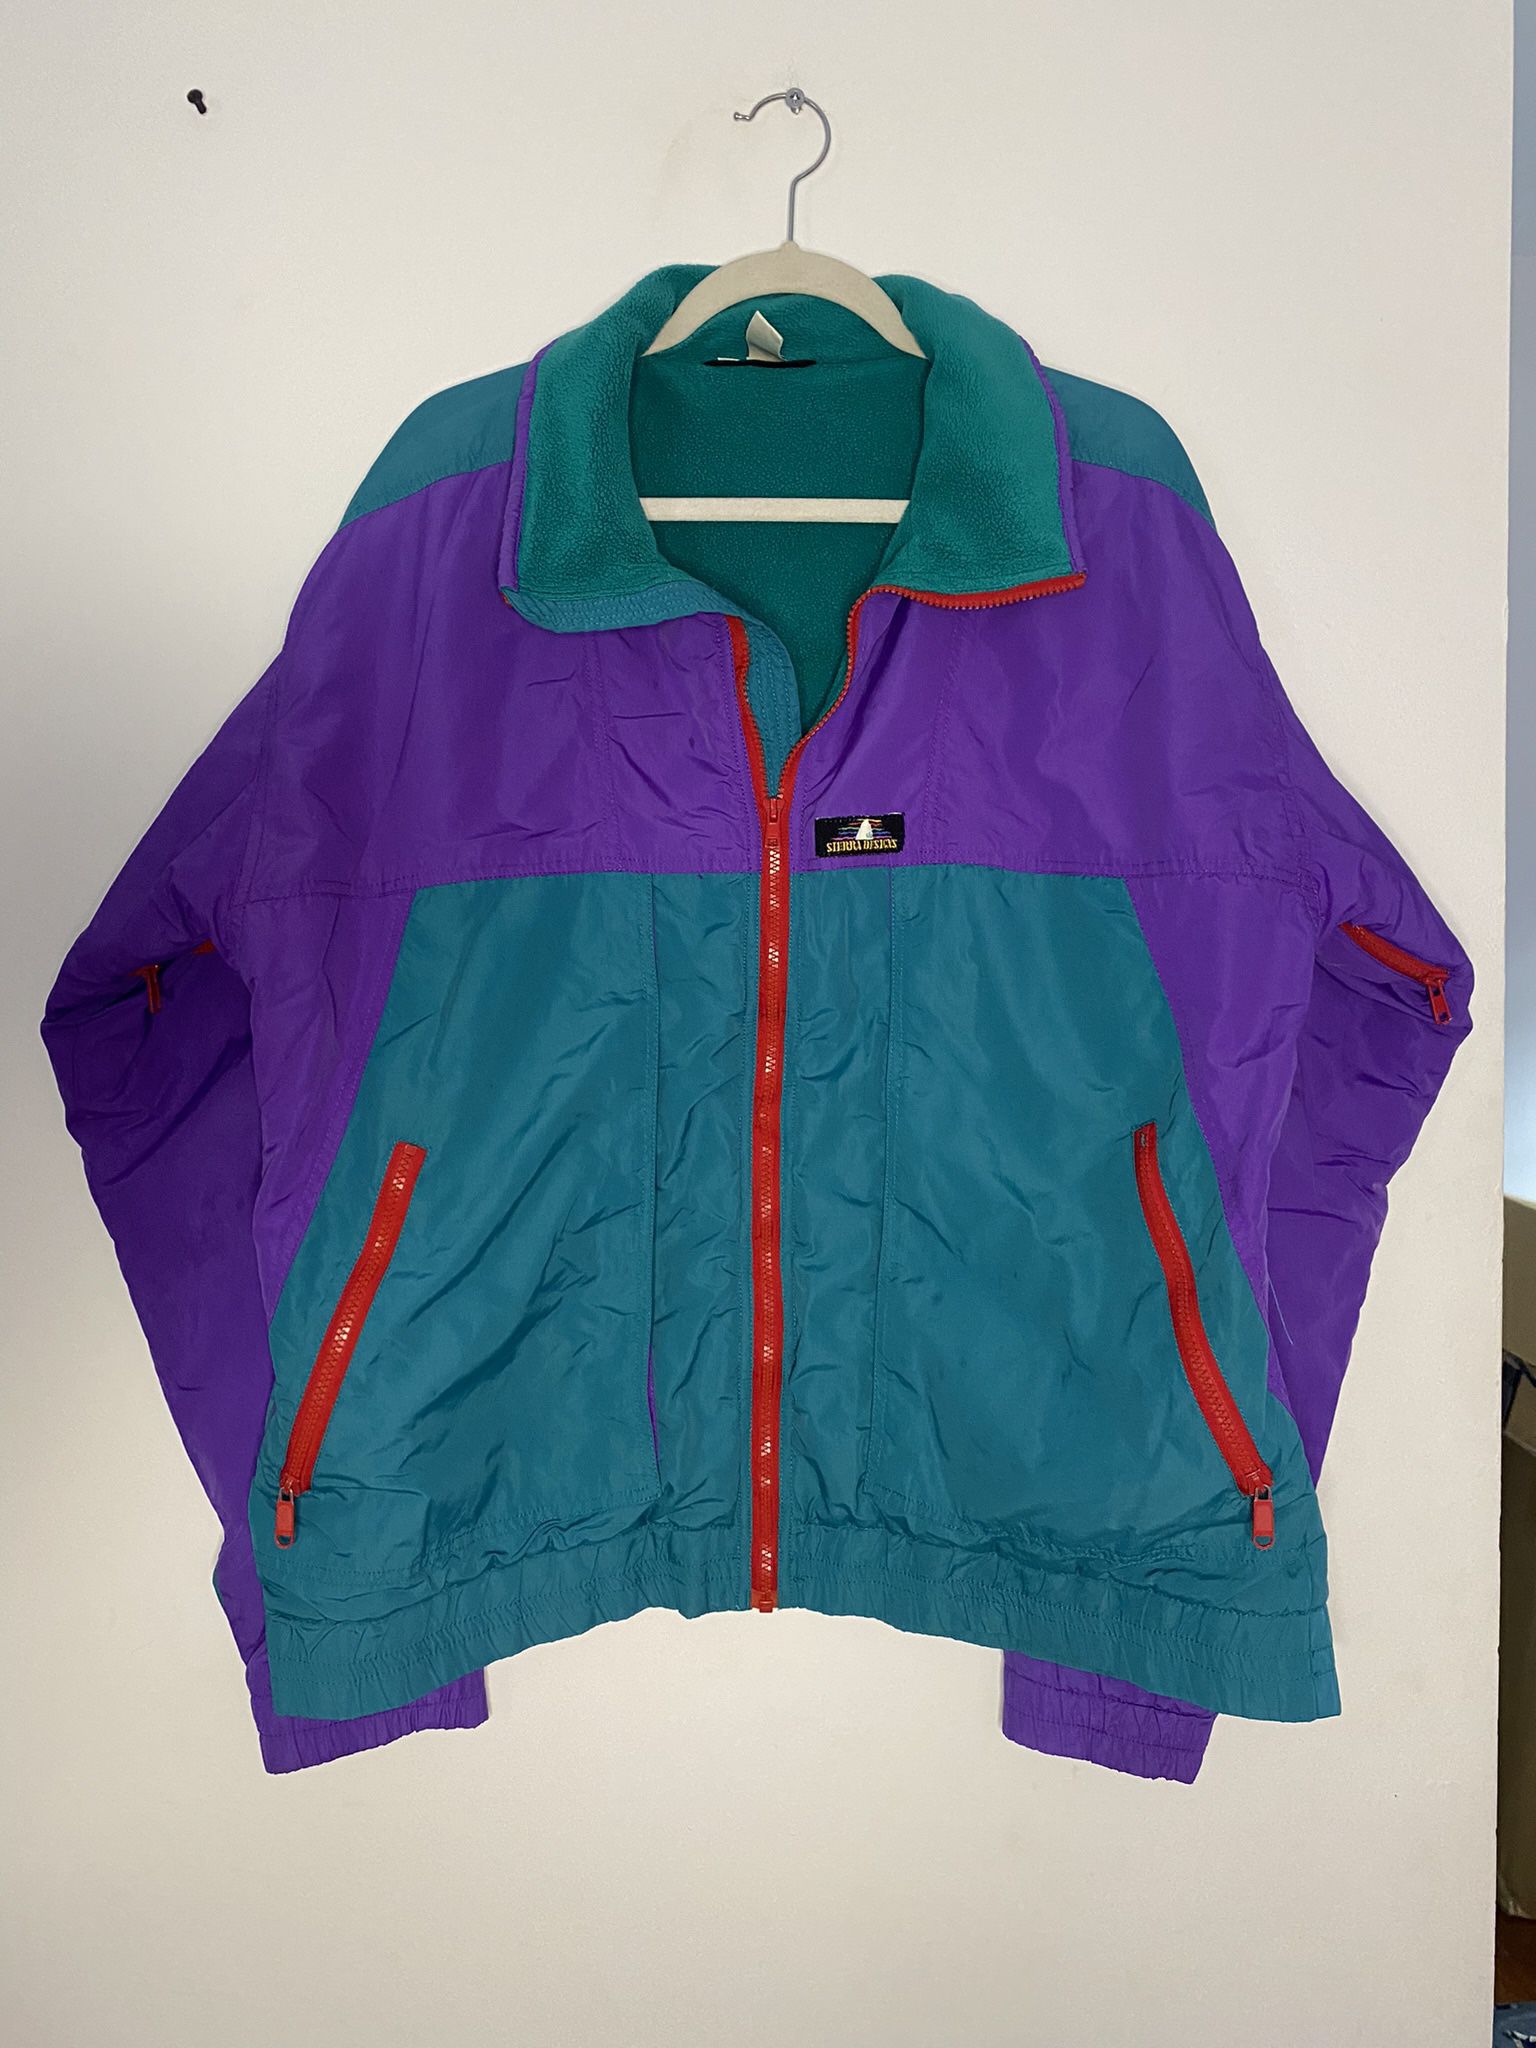 sierra designs vintage rain coat jacket size L